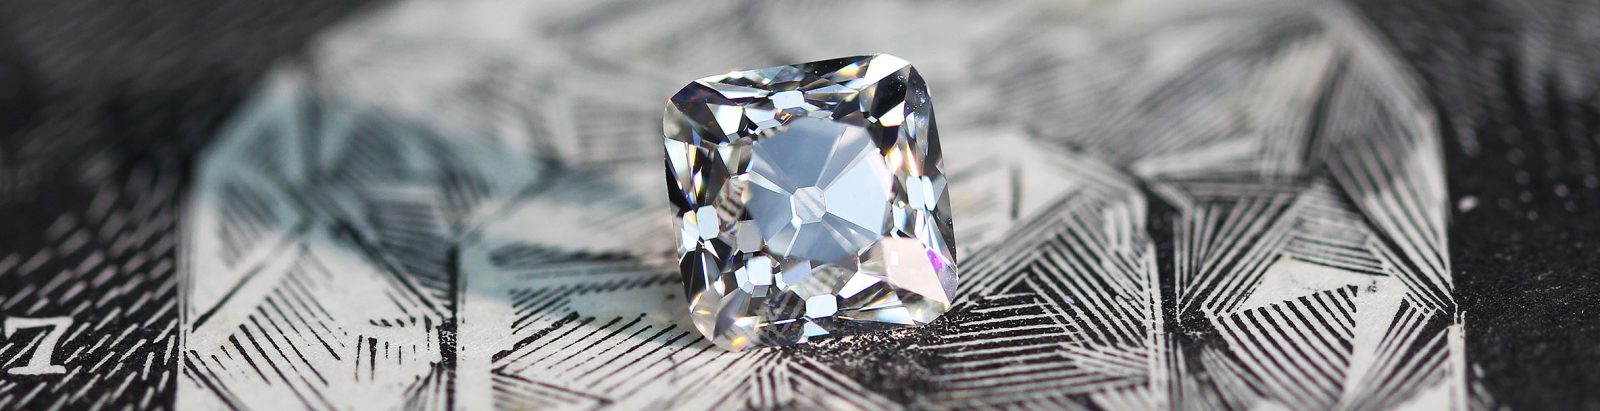 Peruzzi Old Charm Diamond by GemConcepts